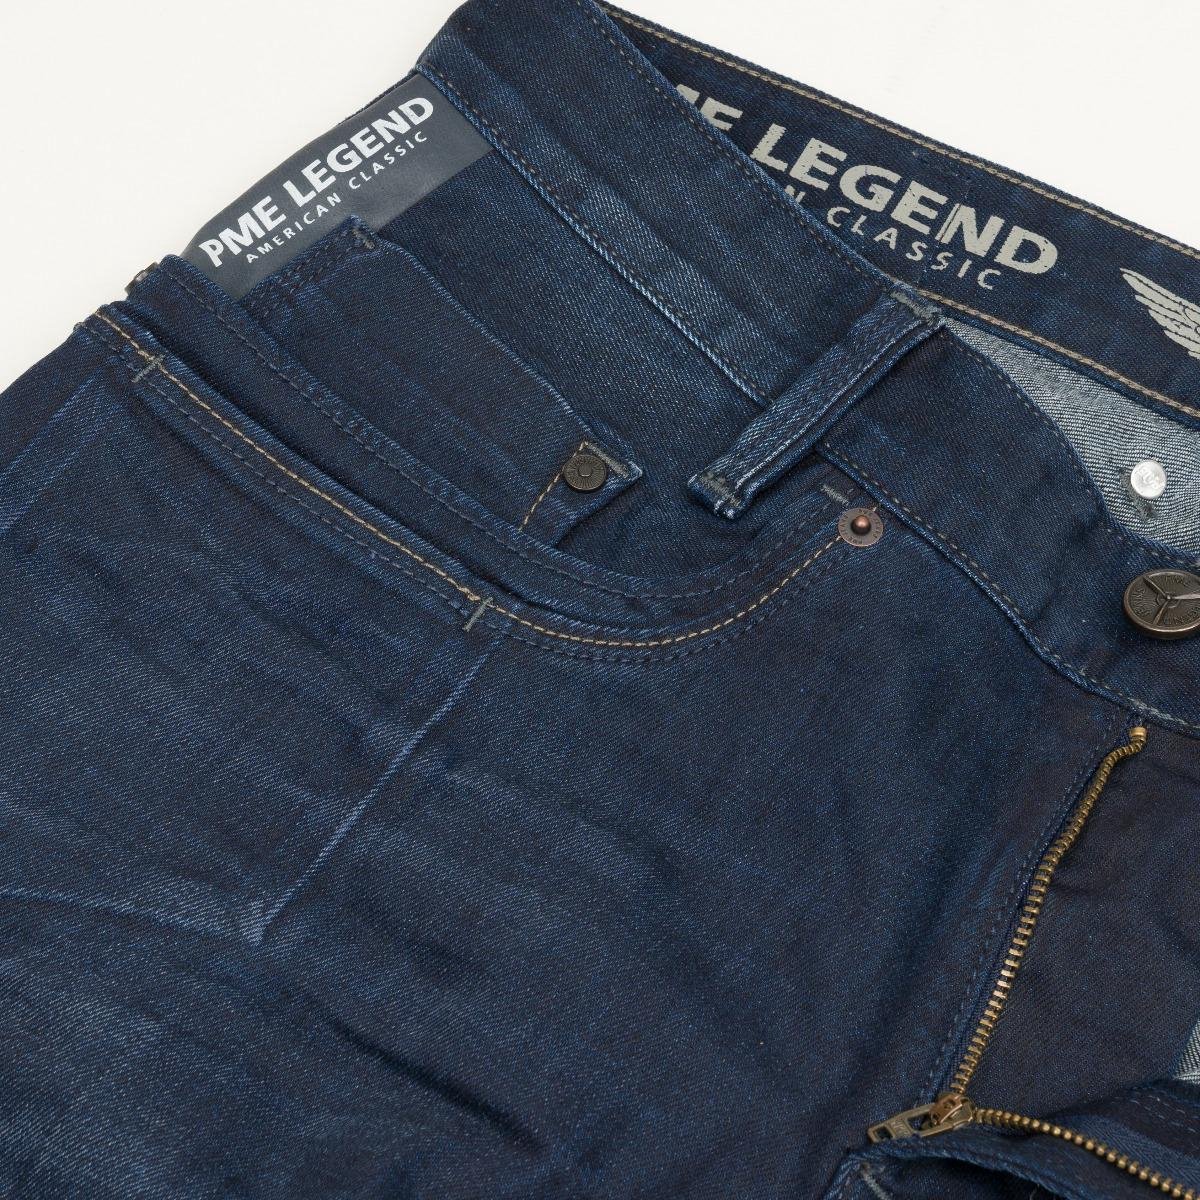 PME Legend - Heren Jeans Skymaster Jeans Stretch Dark - Blauw - Maat 32/34  | bol.com